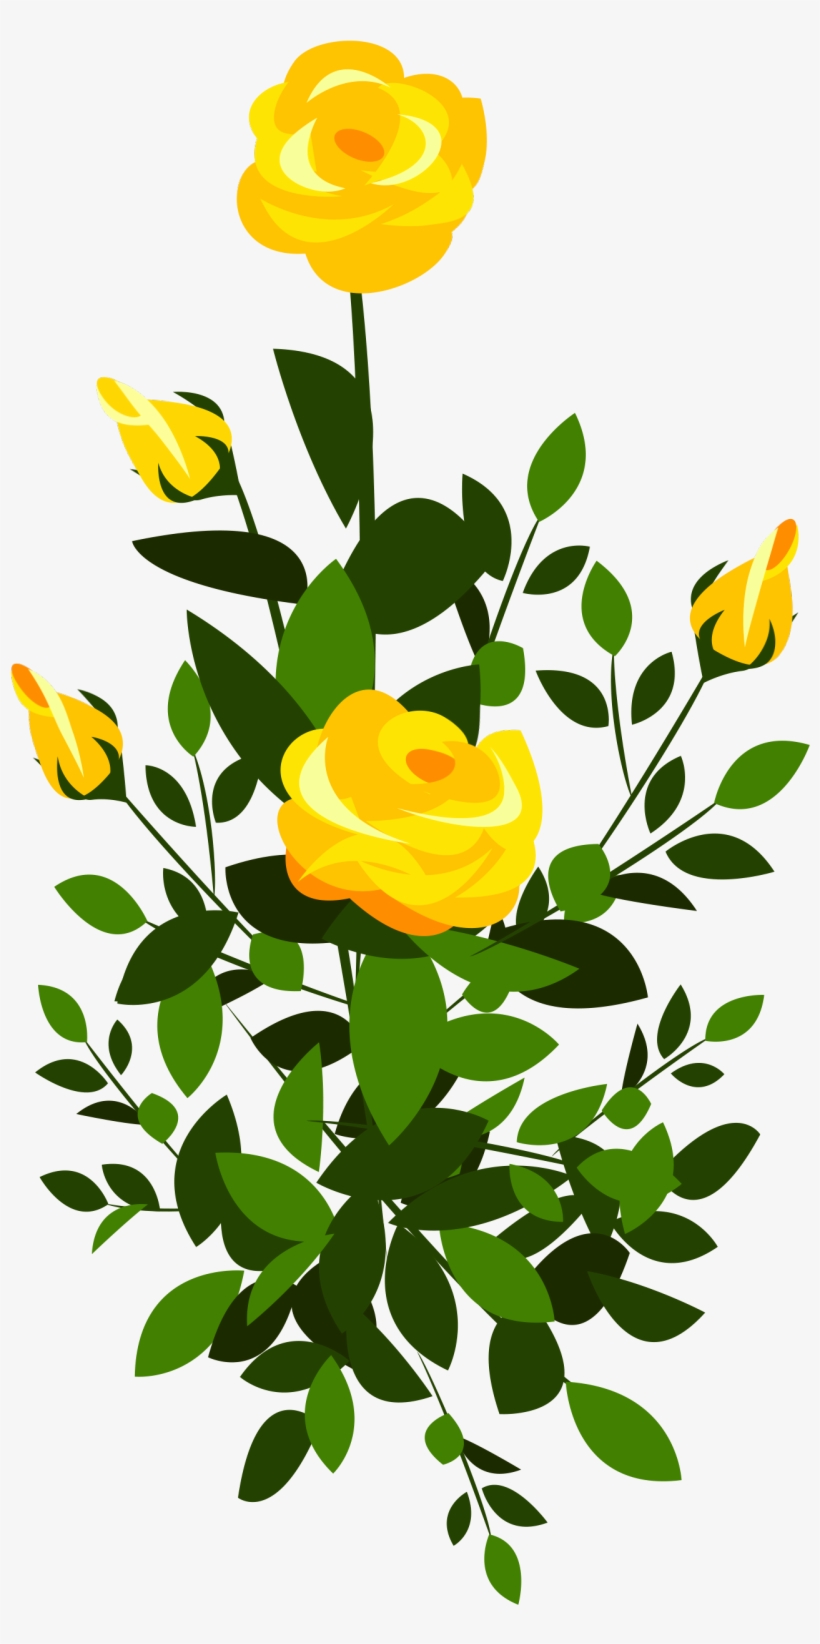 Yellow Rose Bush Png Clipart Image - Yellow Rose Bush Png, transparent png #95839